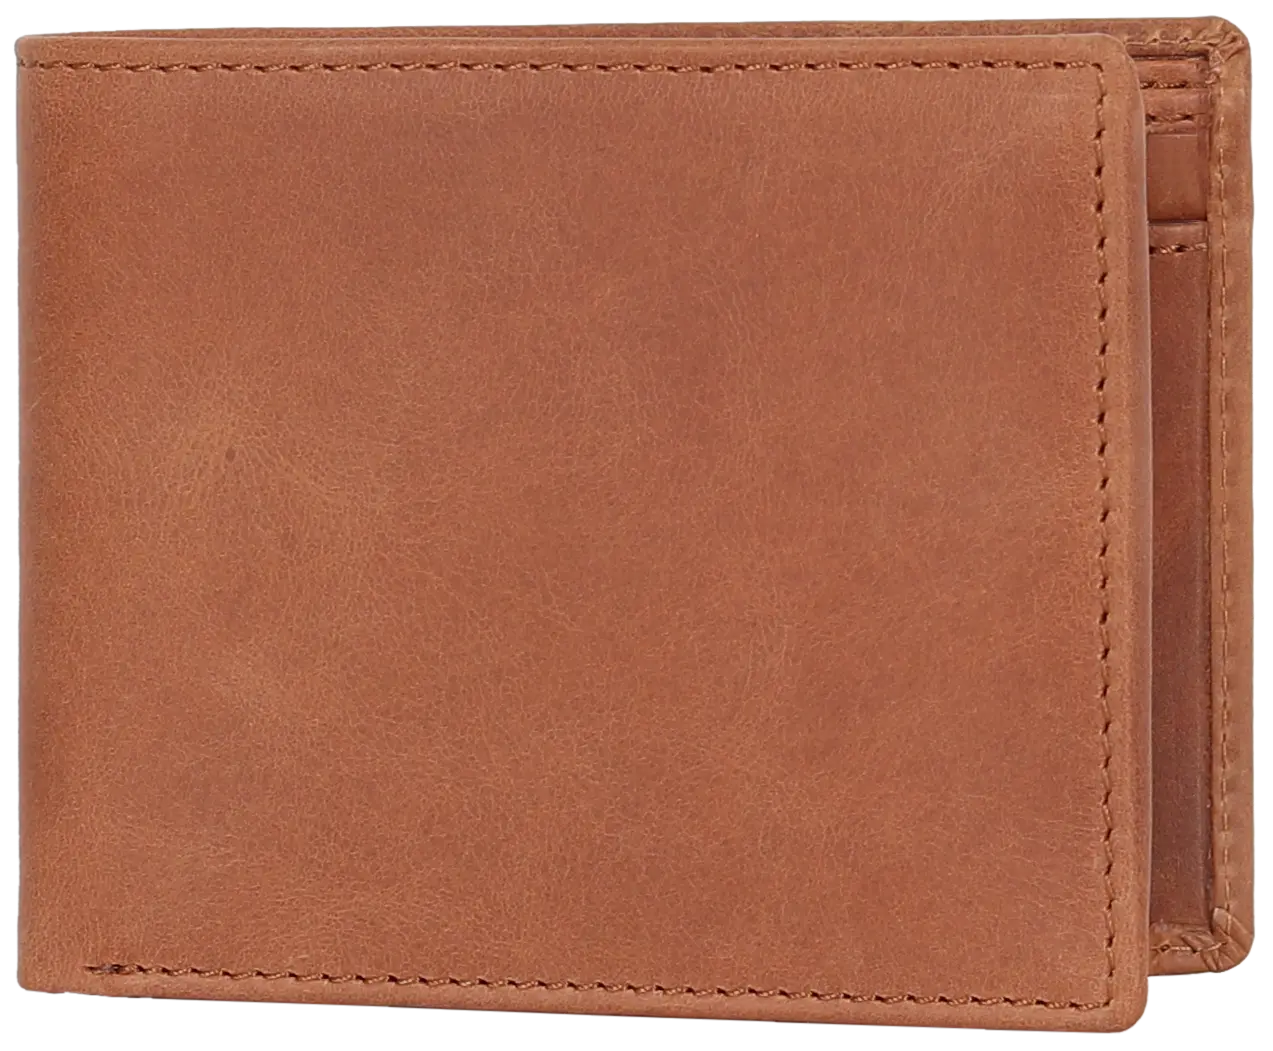 Men's 8 Card Slot Leather Wallet Men's Wallets Boutique of Leathers/Open Road